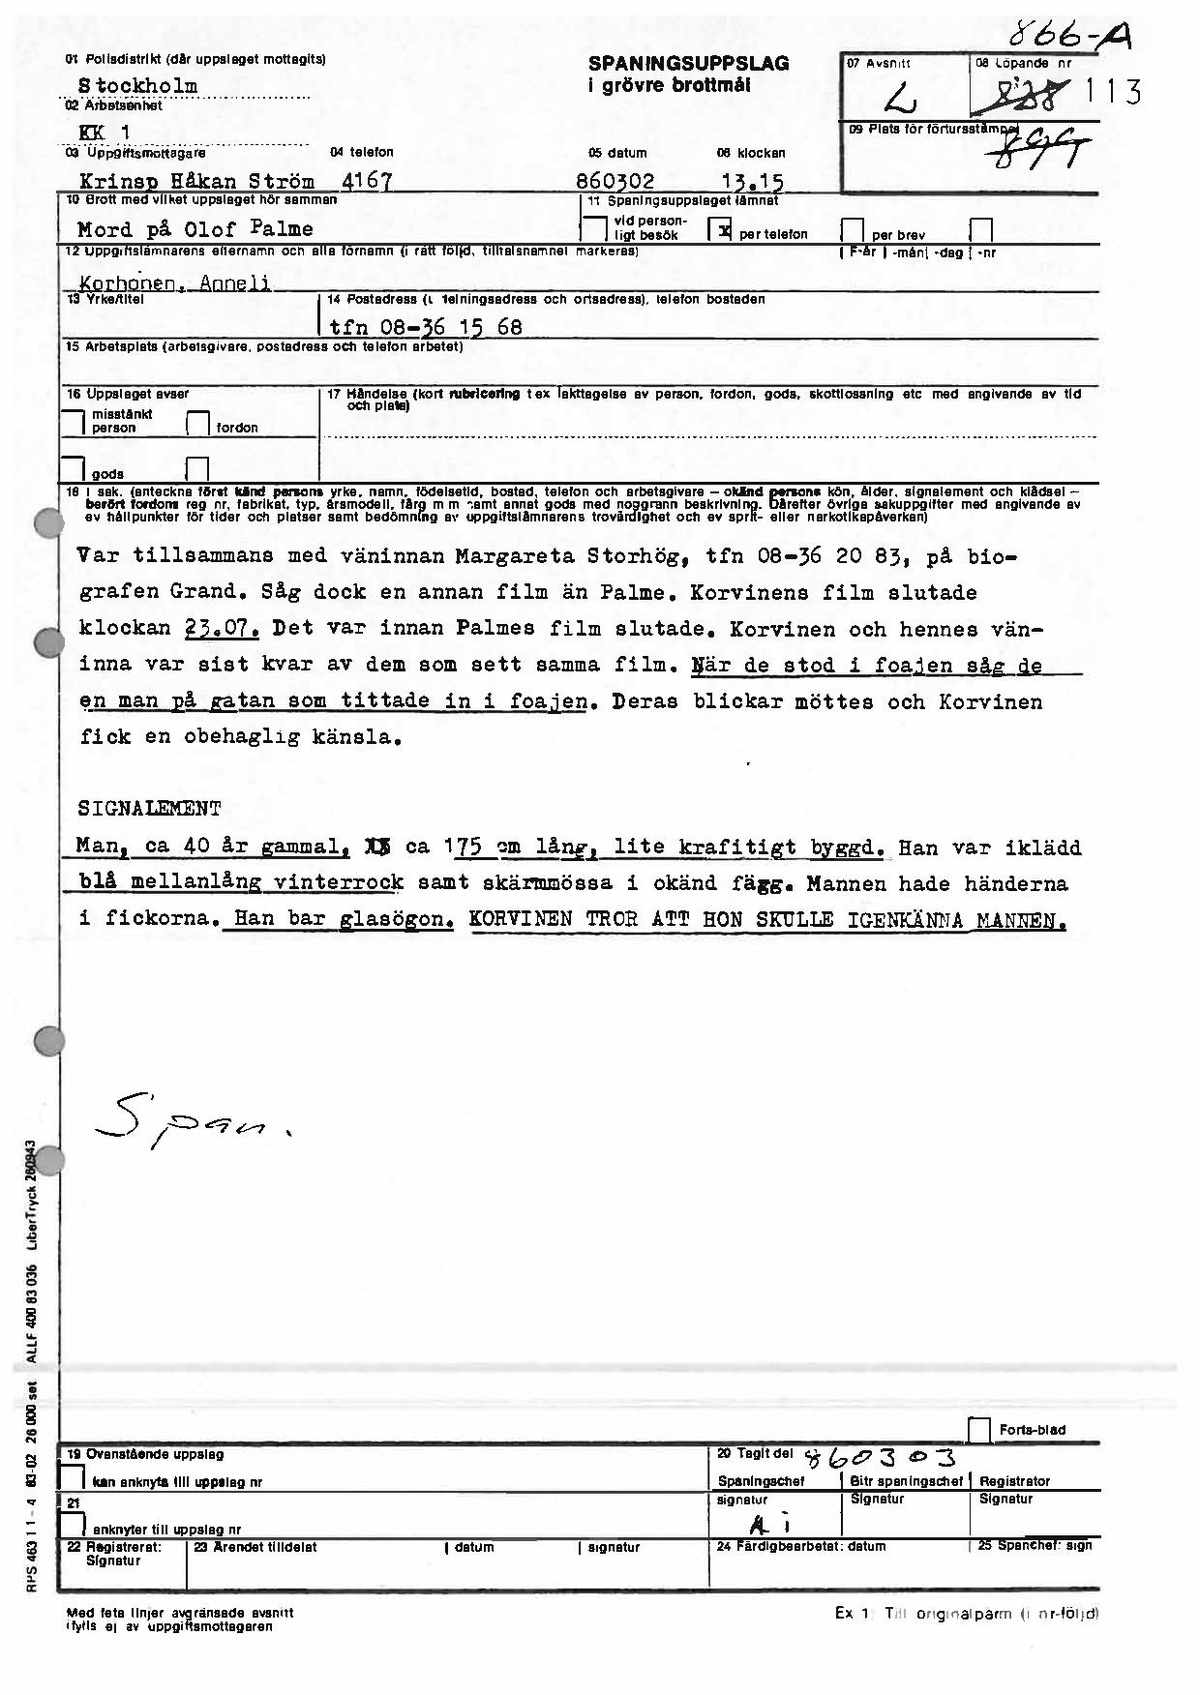 Pol-1986-03-02 1315 L866-00-A Anneli Korhonen Komplettering signalement.pdf